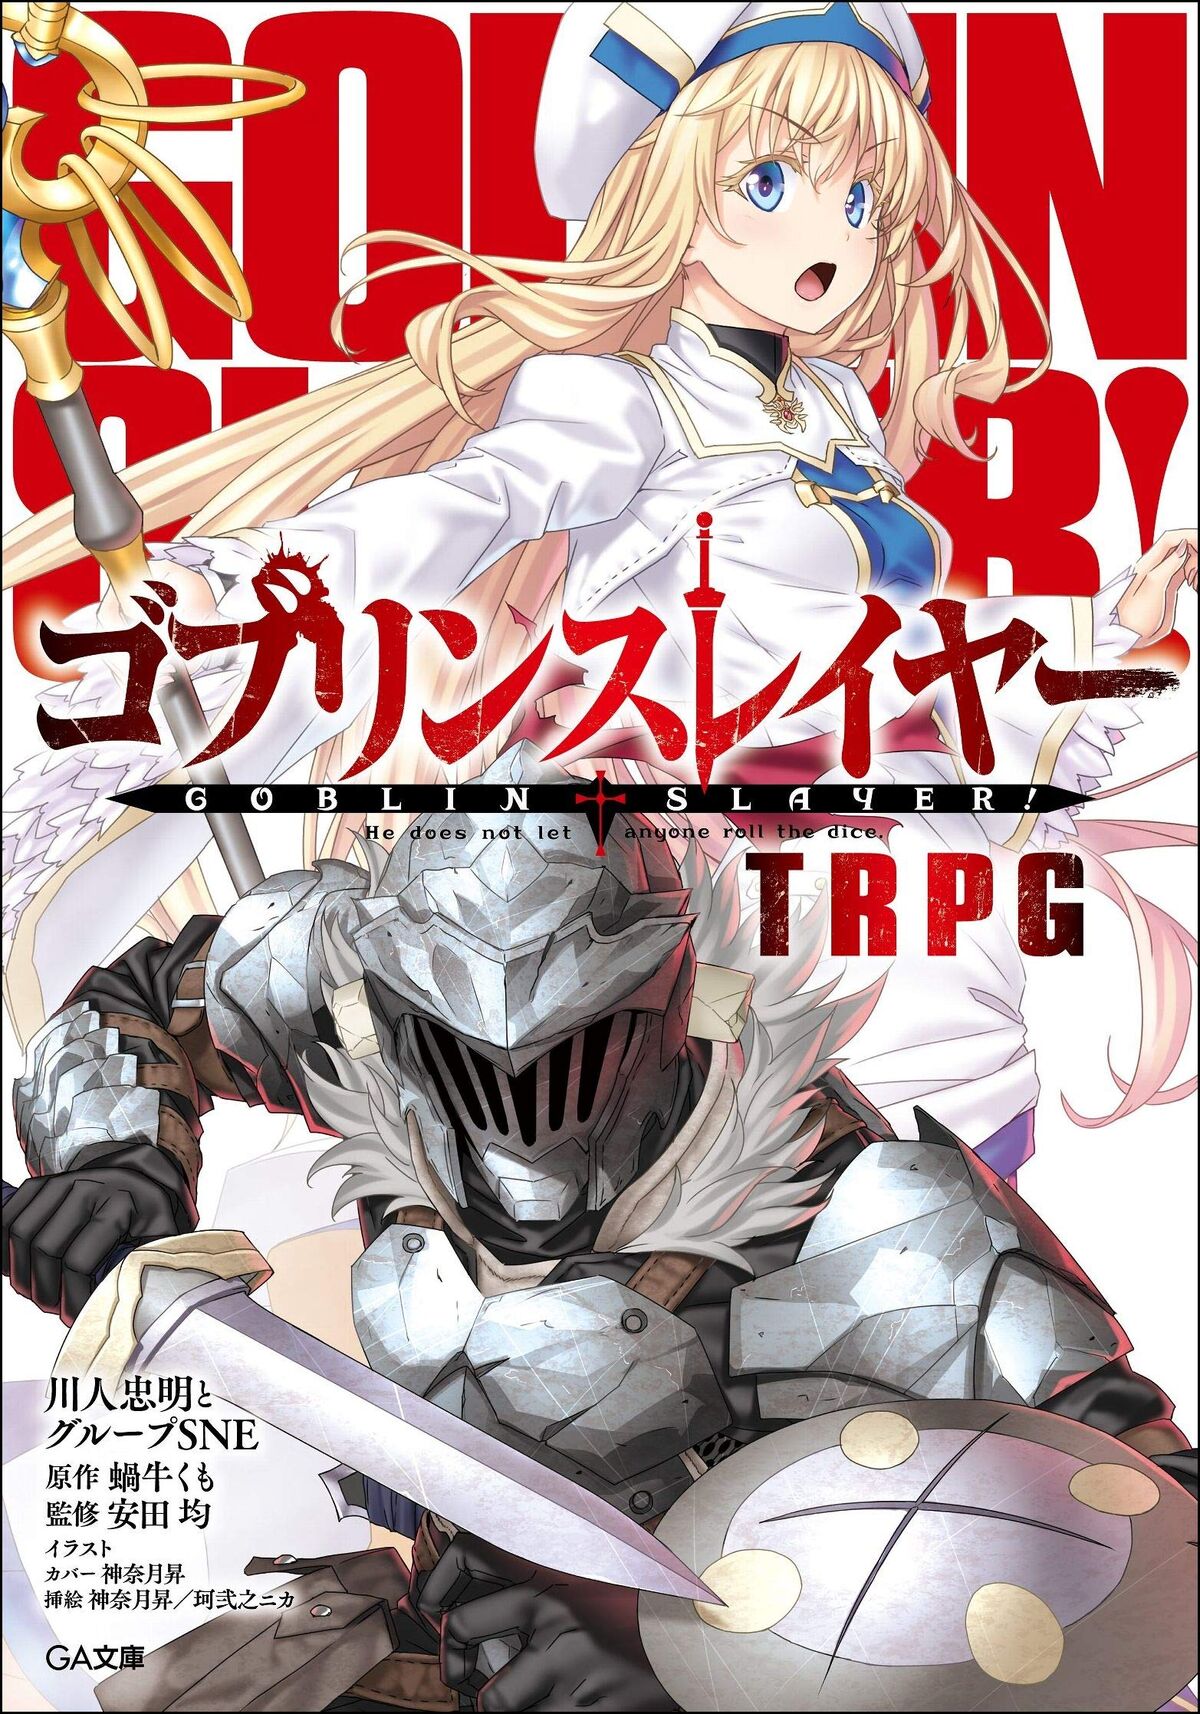 goblin-slayer' tag wiki - Anime & Manga Stack Exchange